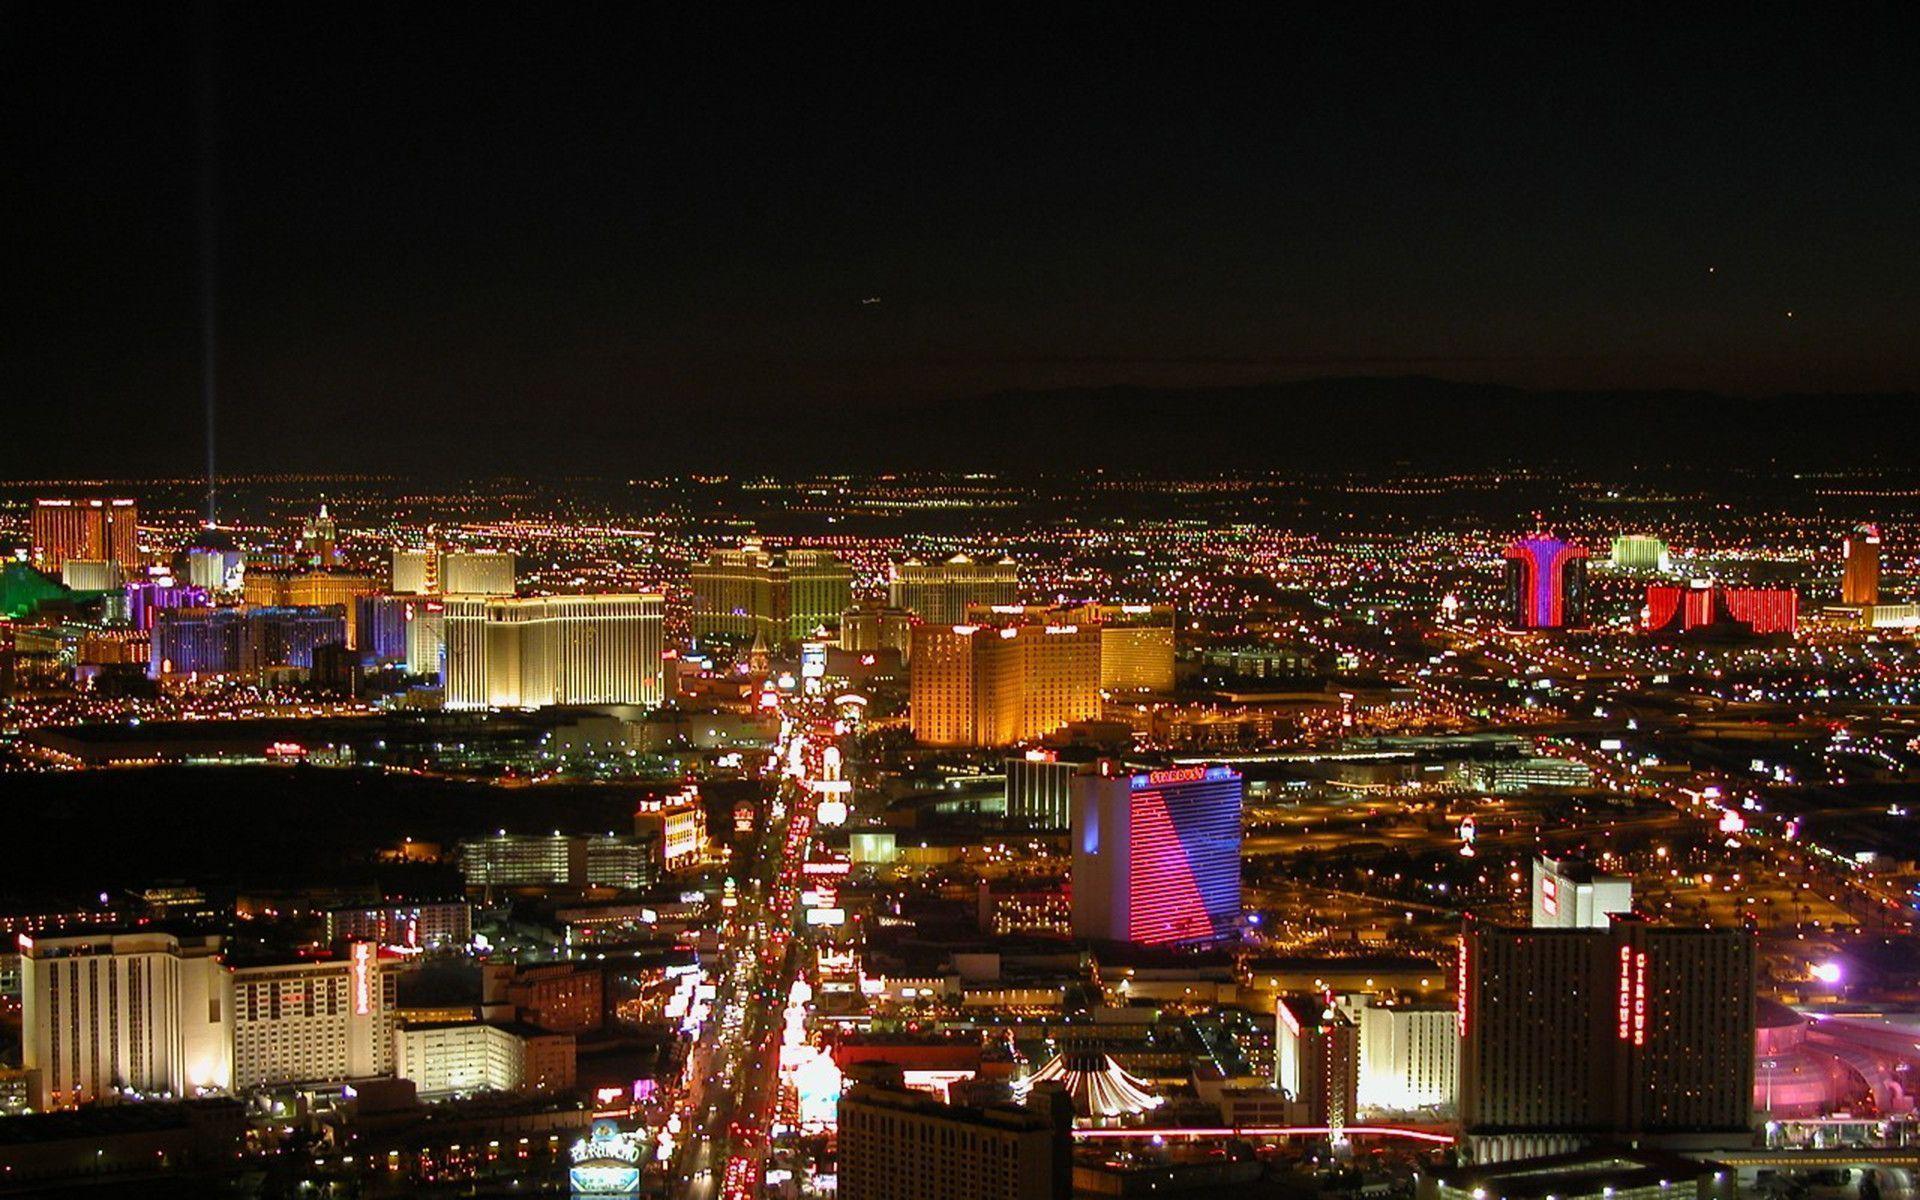 Las Vegas Desktop Wallpaper